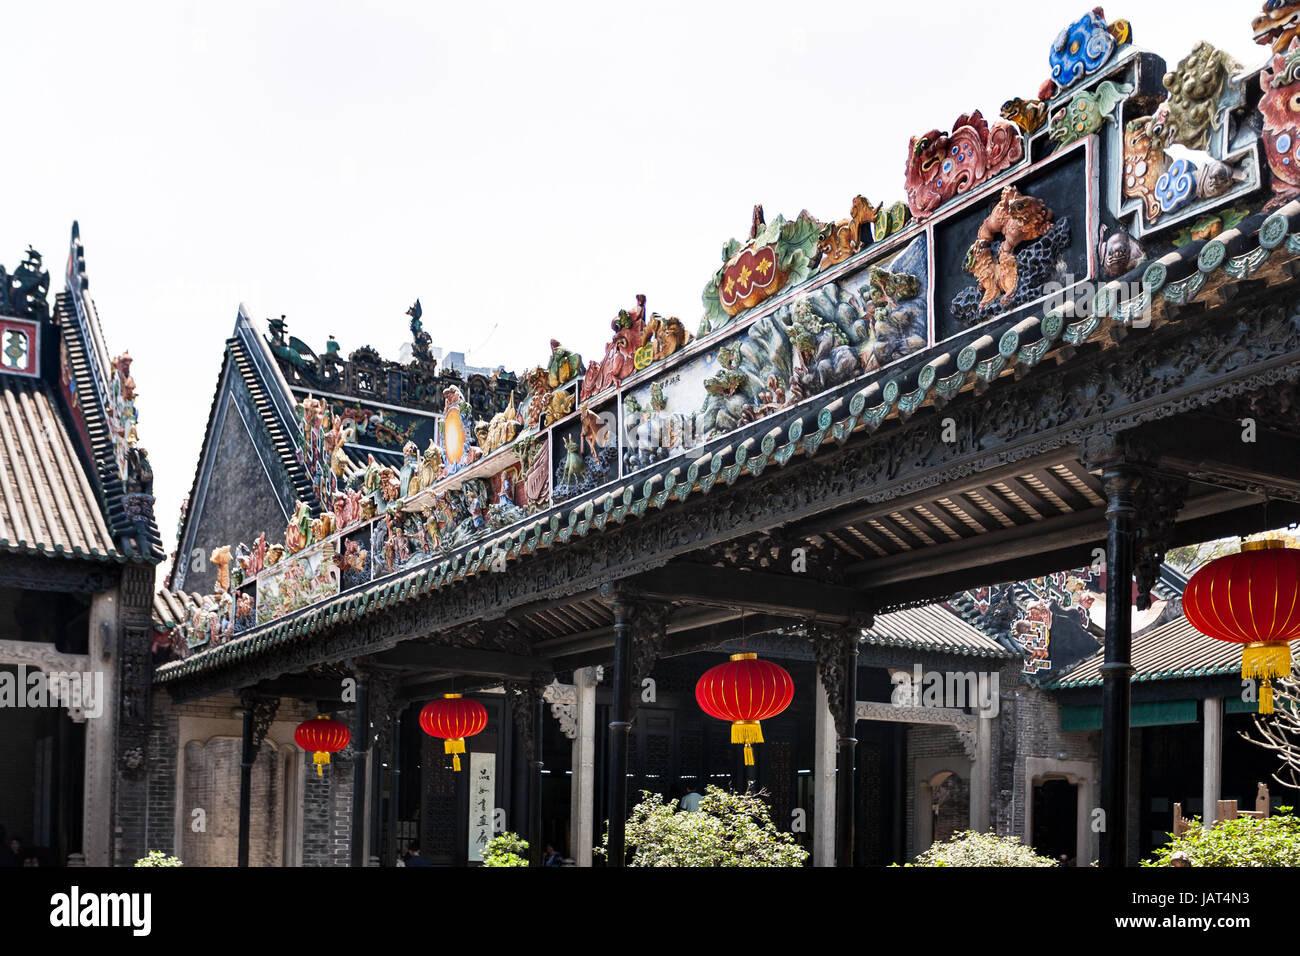 GUANGZHOU - CINA - Aprile 1, 2017: Spiga del tetto del Clan Chen sala ancestrale tempio accademico (Guangdong Folk Art Museum) in Guangzhou. La casa è stata pr Foto Stock